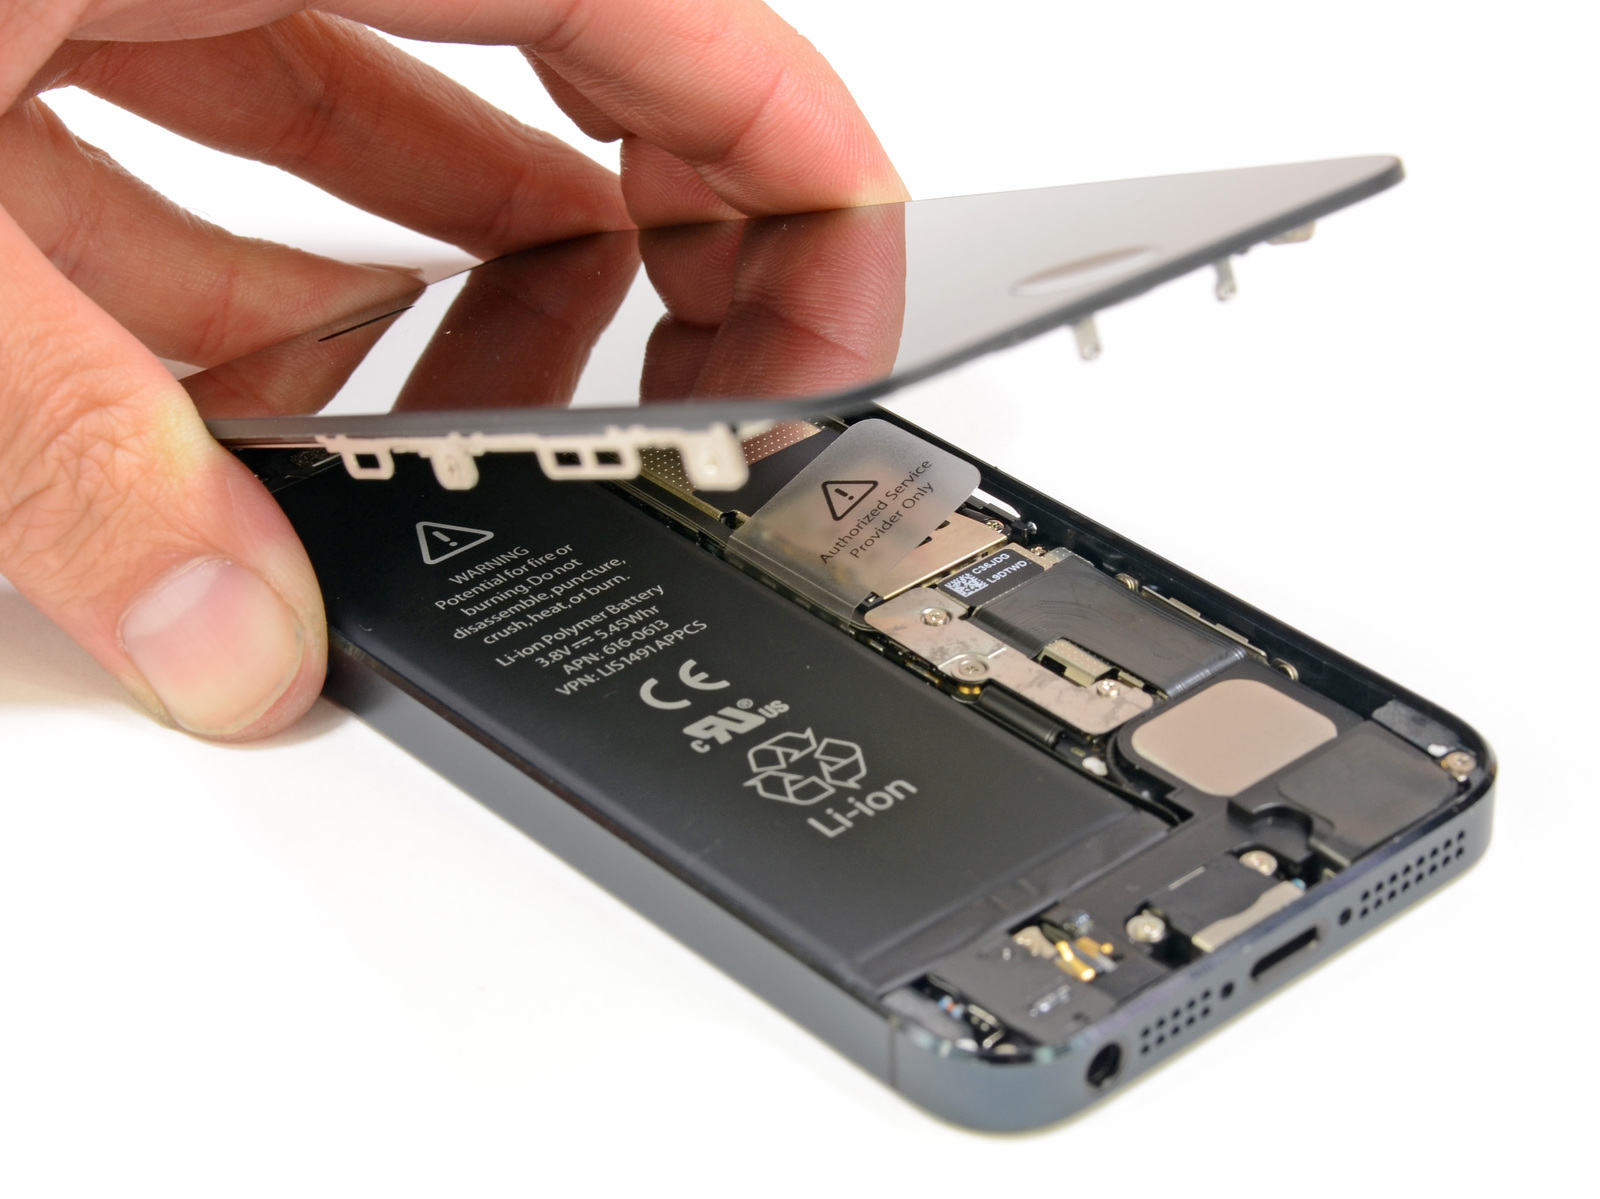 iPhone 5 desmontado pela iFixit - tela sendo retirada